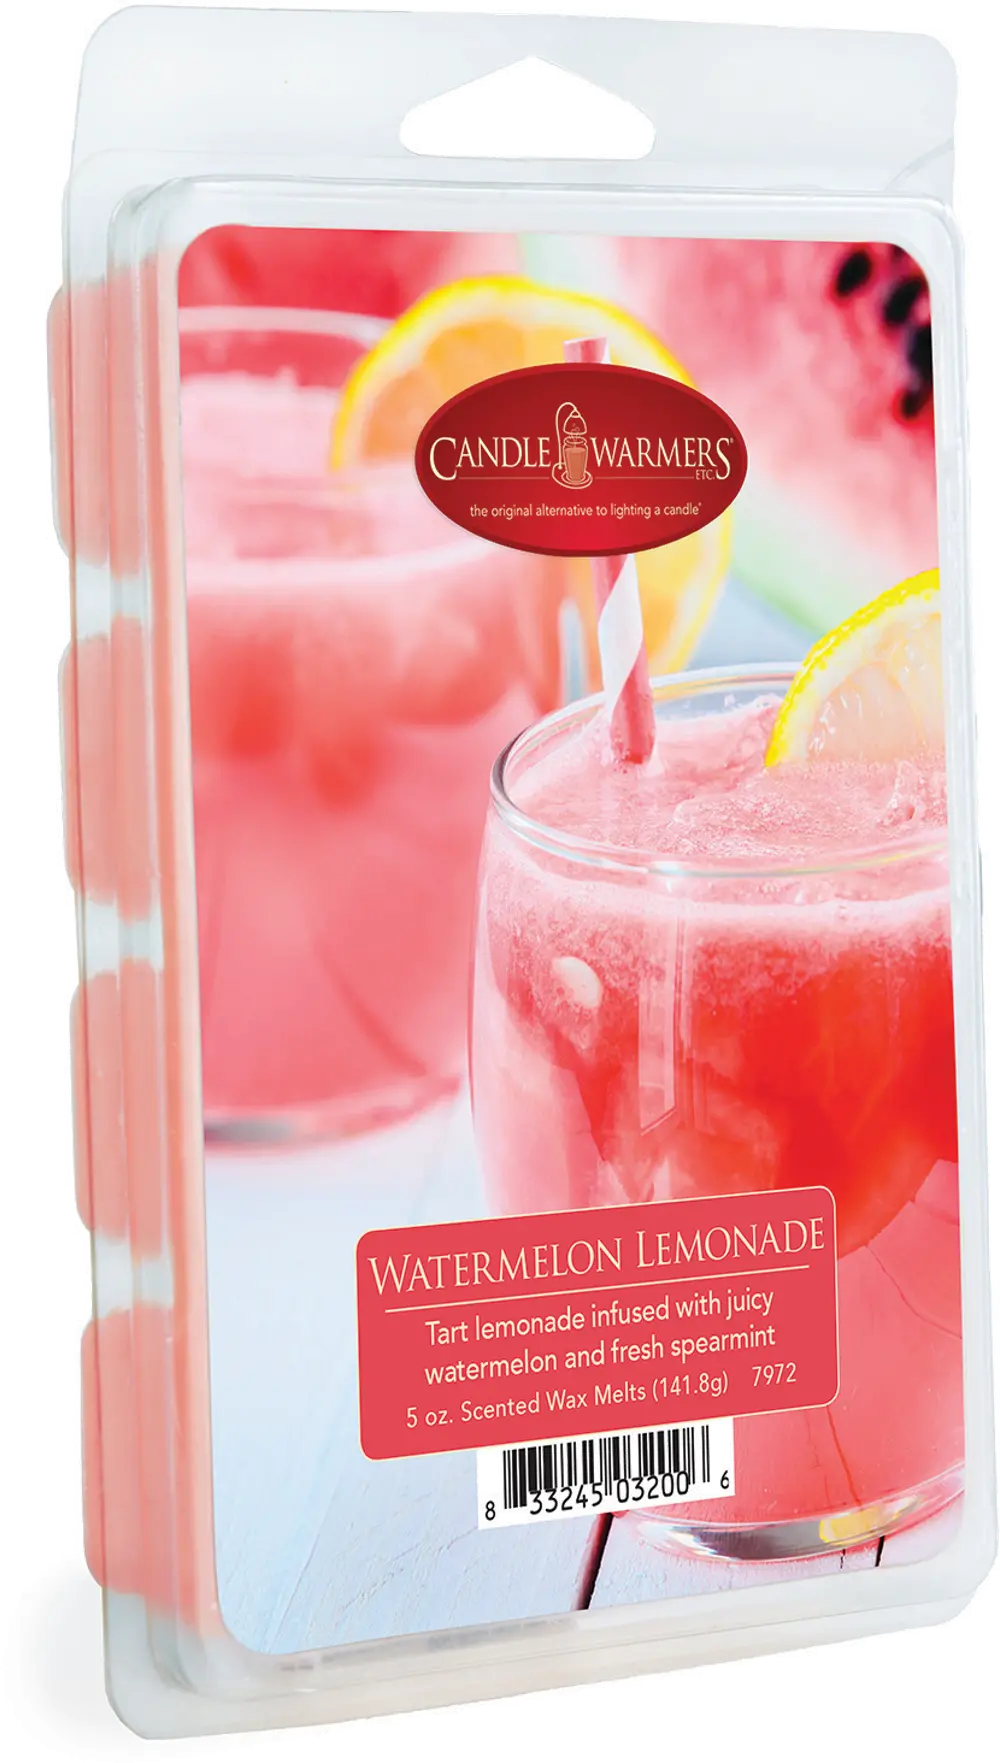 Watermelon Lemonade 5oz Wax Melt - Candle Warmers-1